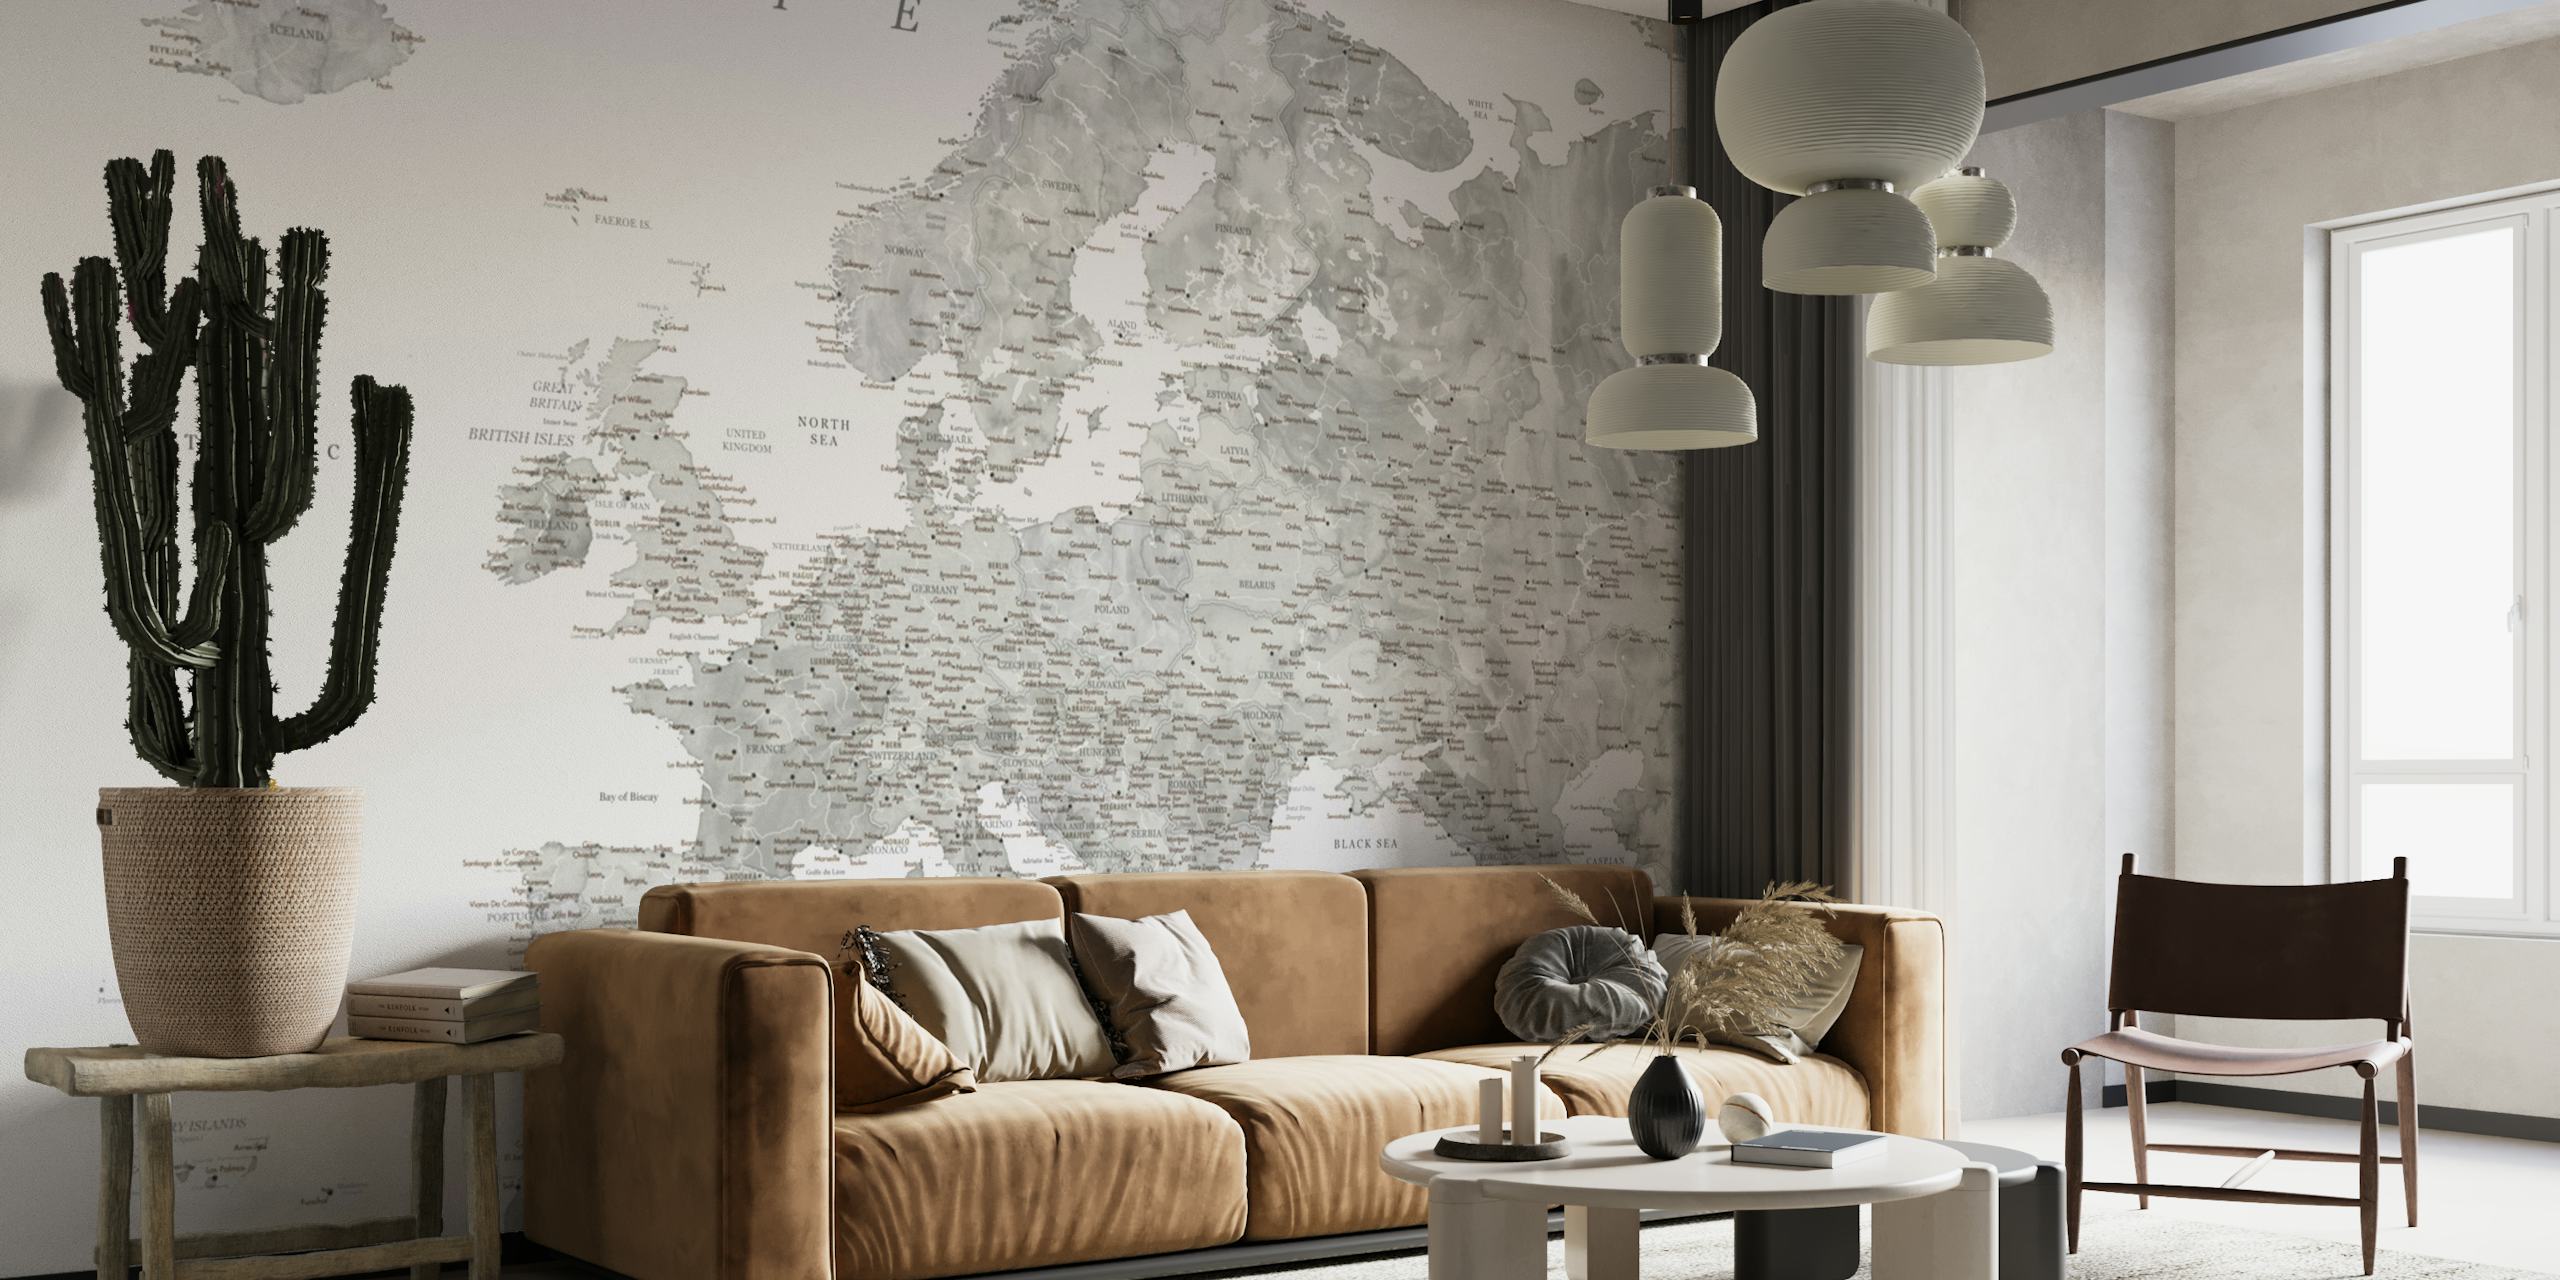 Detailed Europe map Jimmy wallpaper